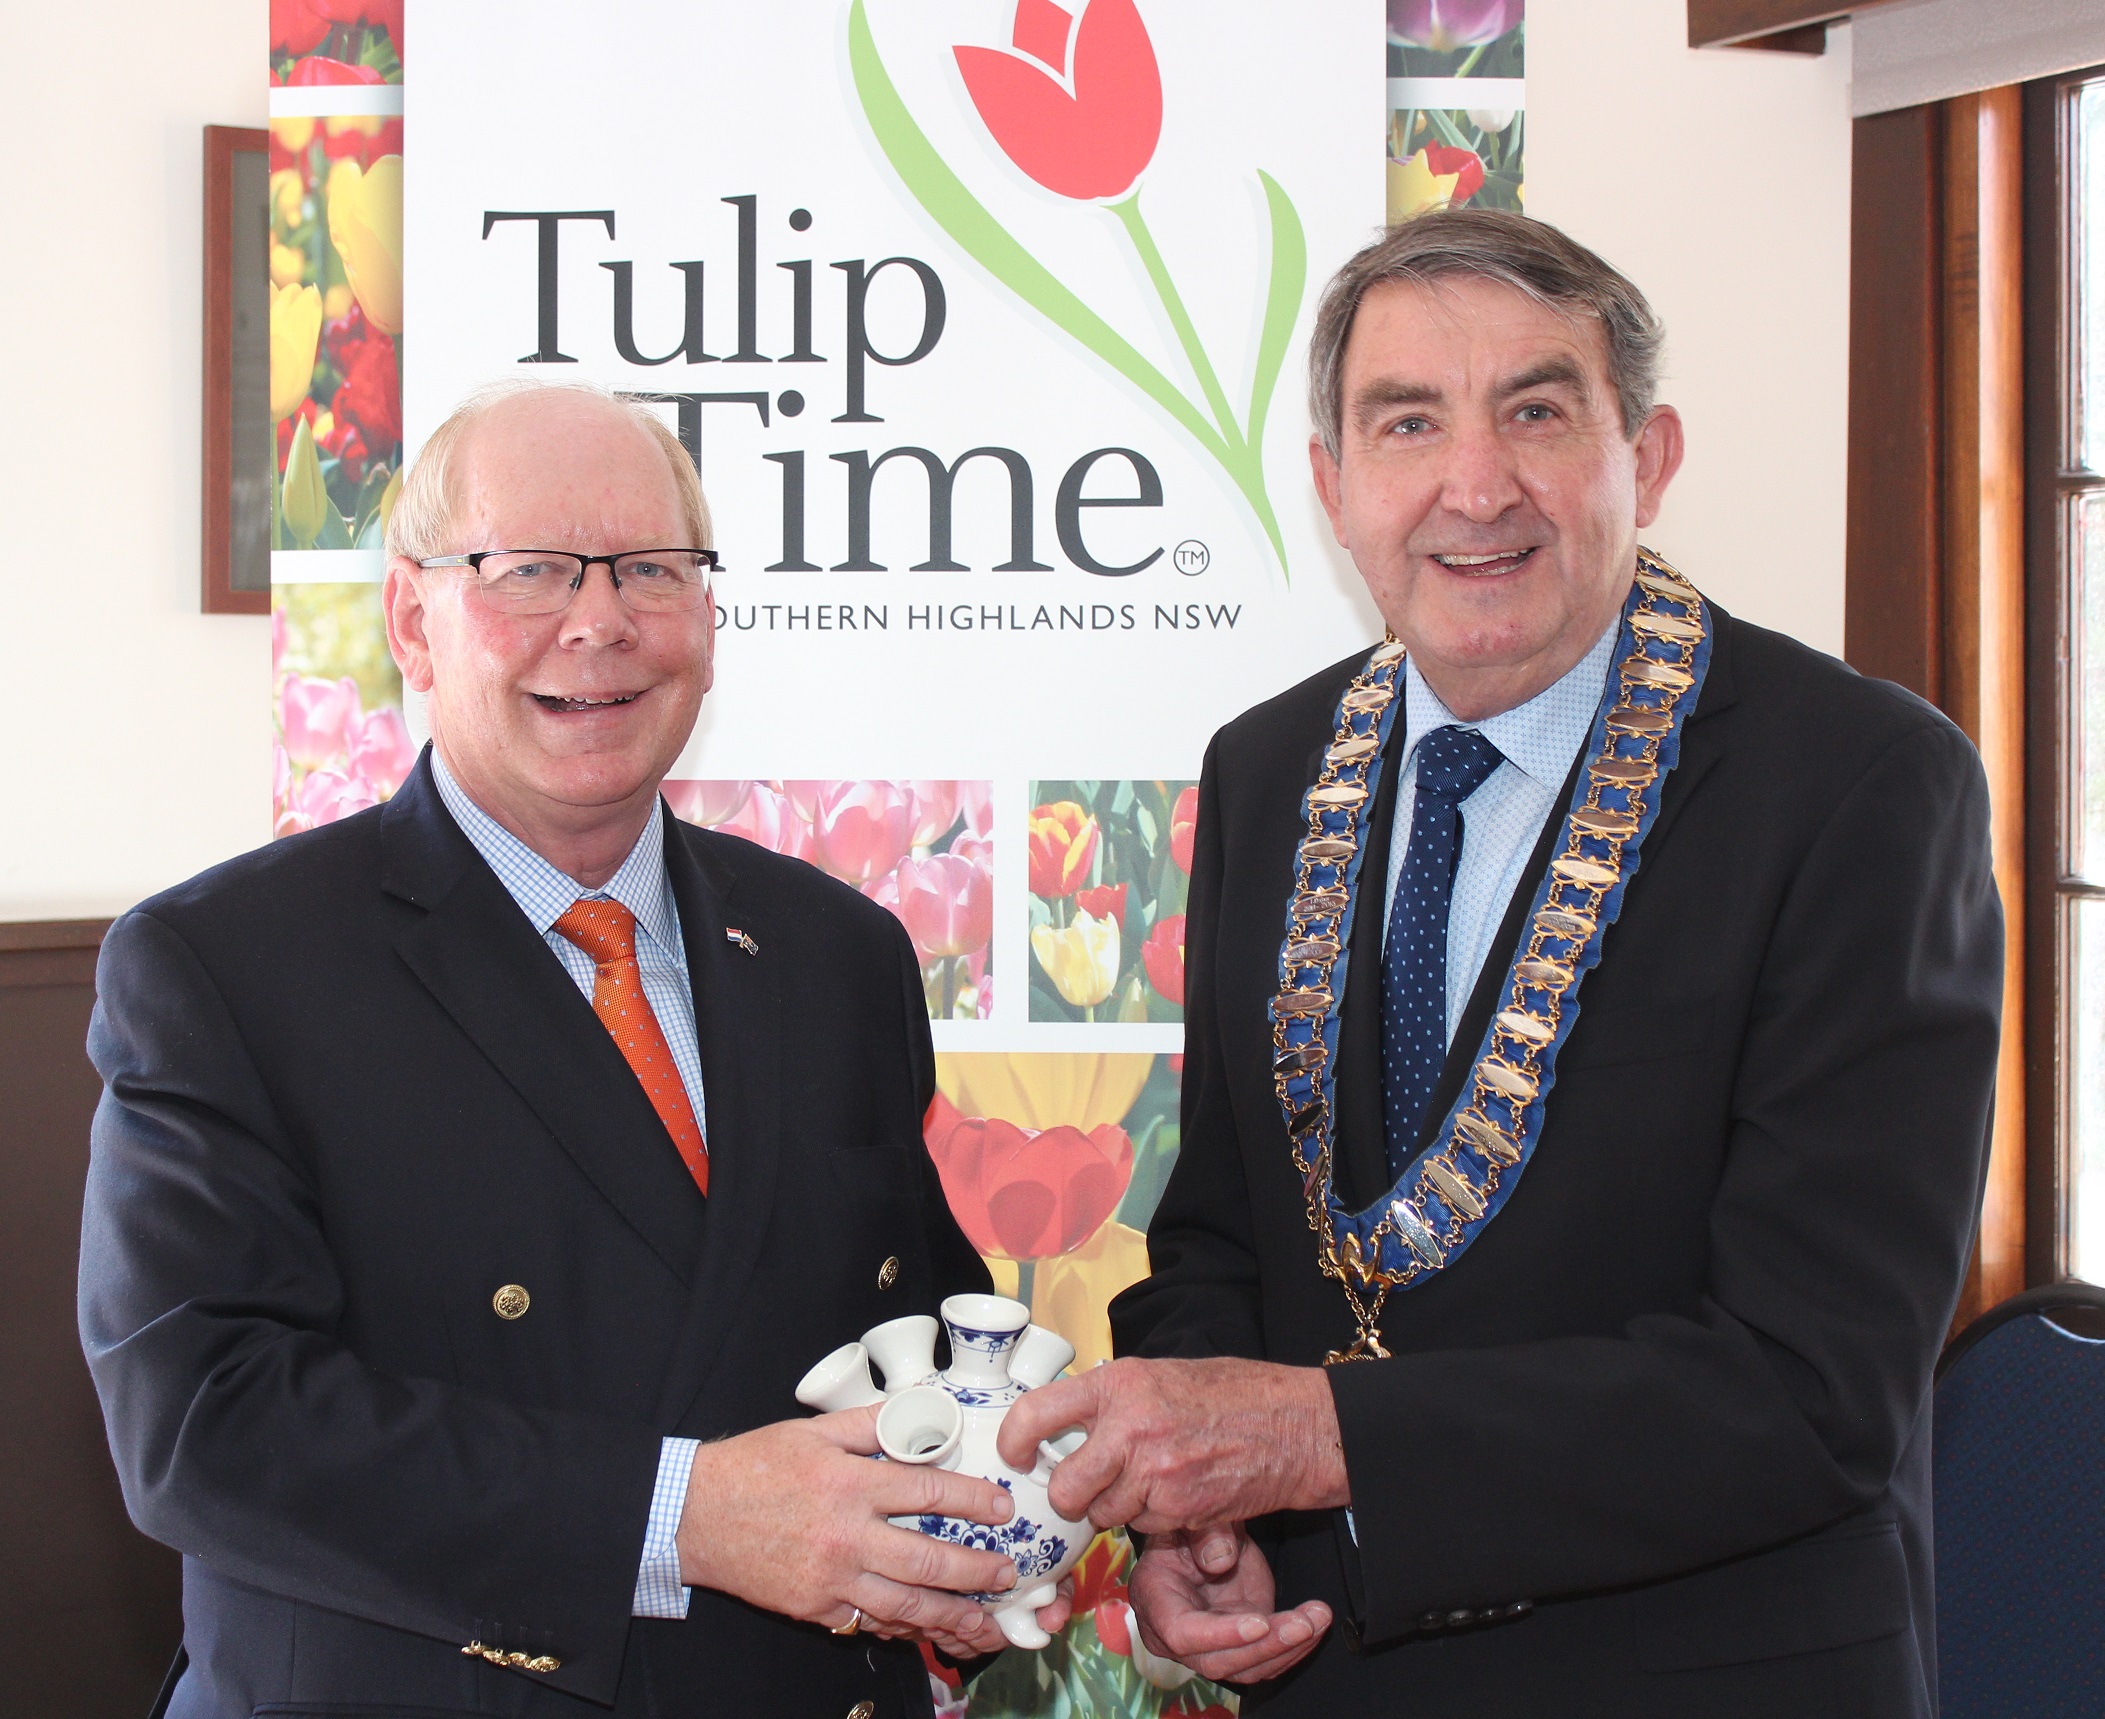 Mr Neuhaus presented Mayor Gair with a porcelain tulip vase from Holland